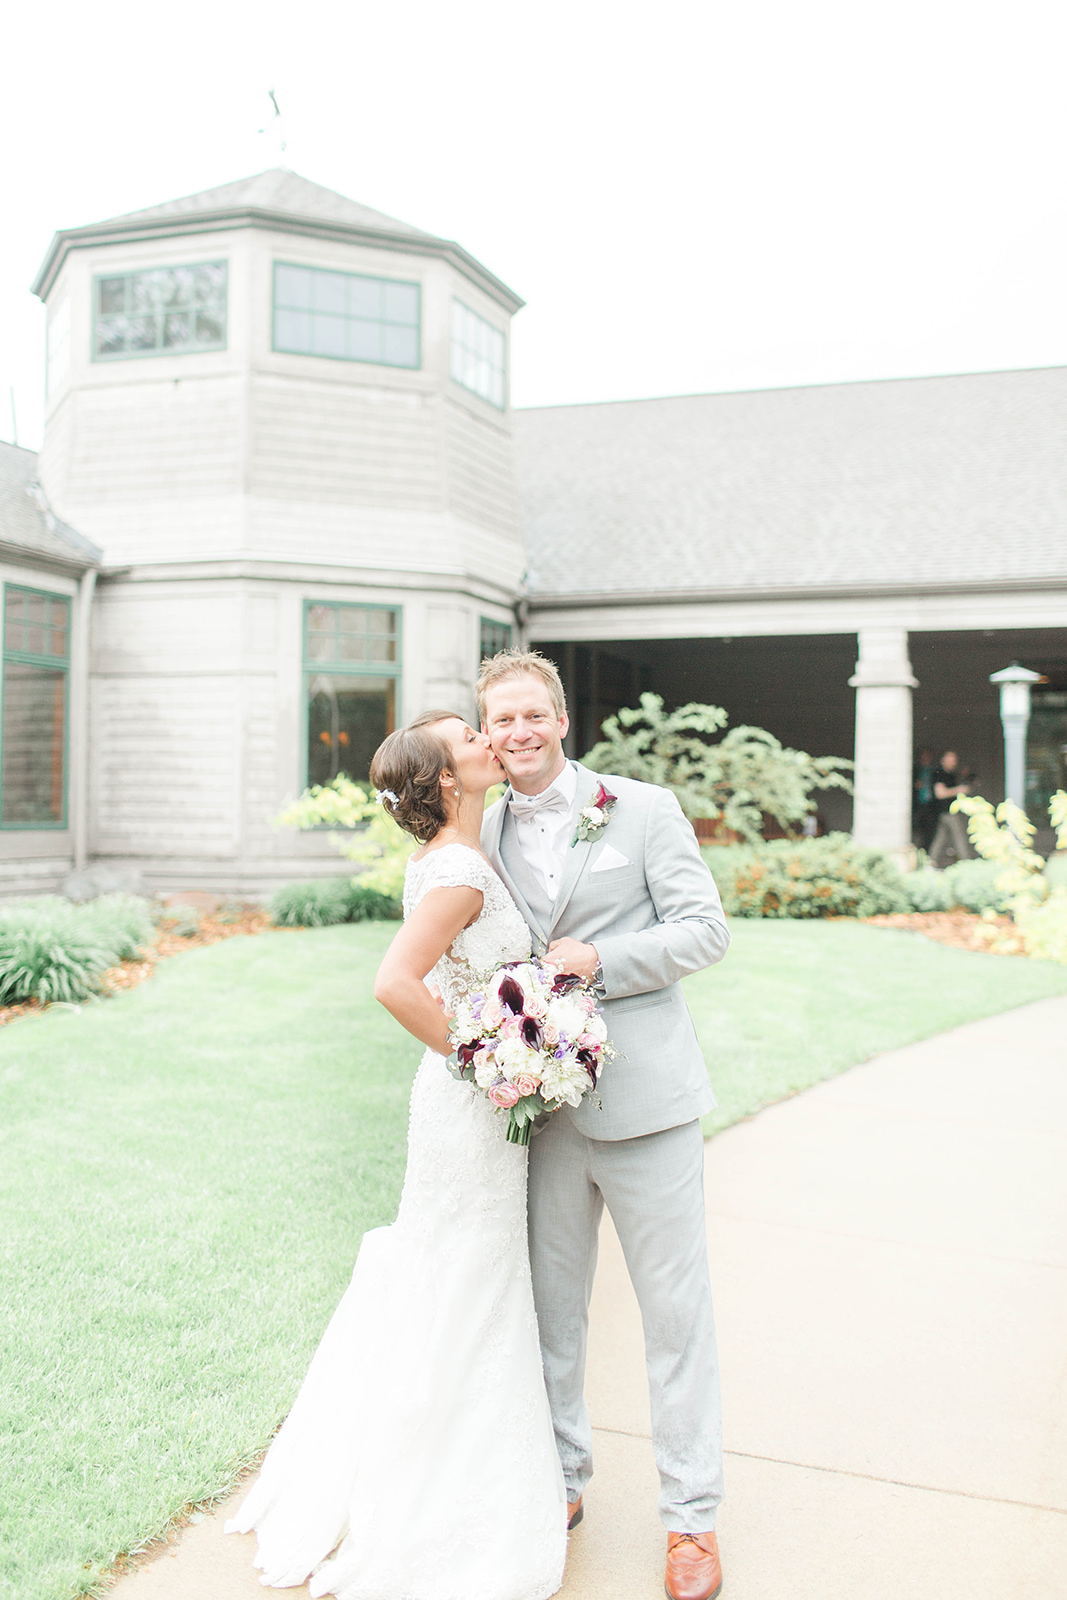 A Romantic Wausau Country Club Wisconsin Wedding - The Overwhelmed Bride Wedding Blog